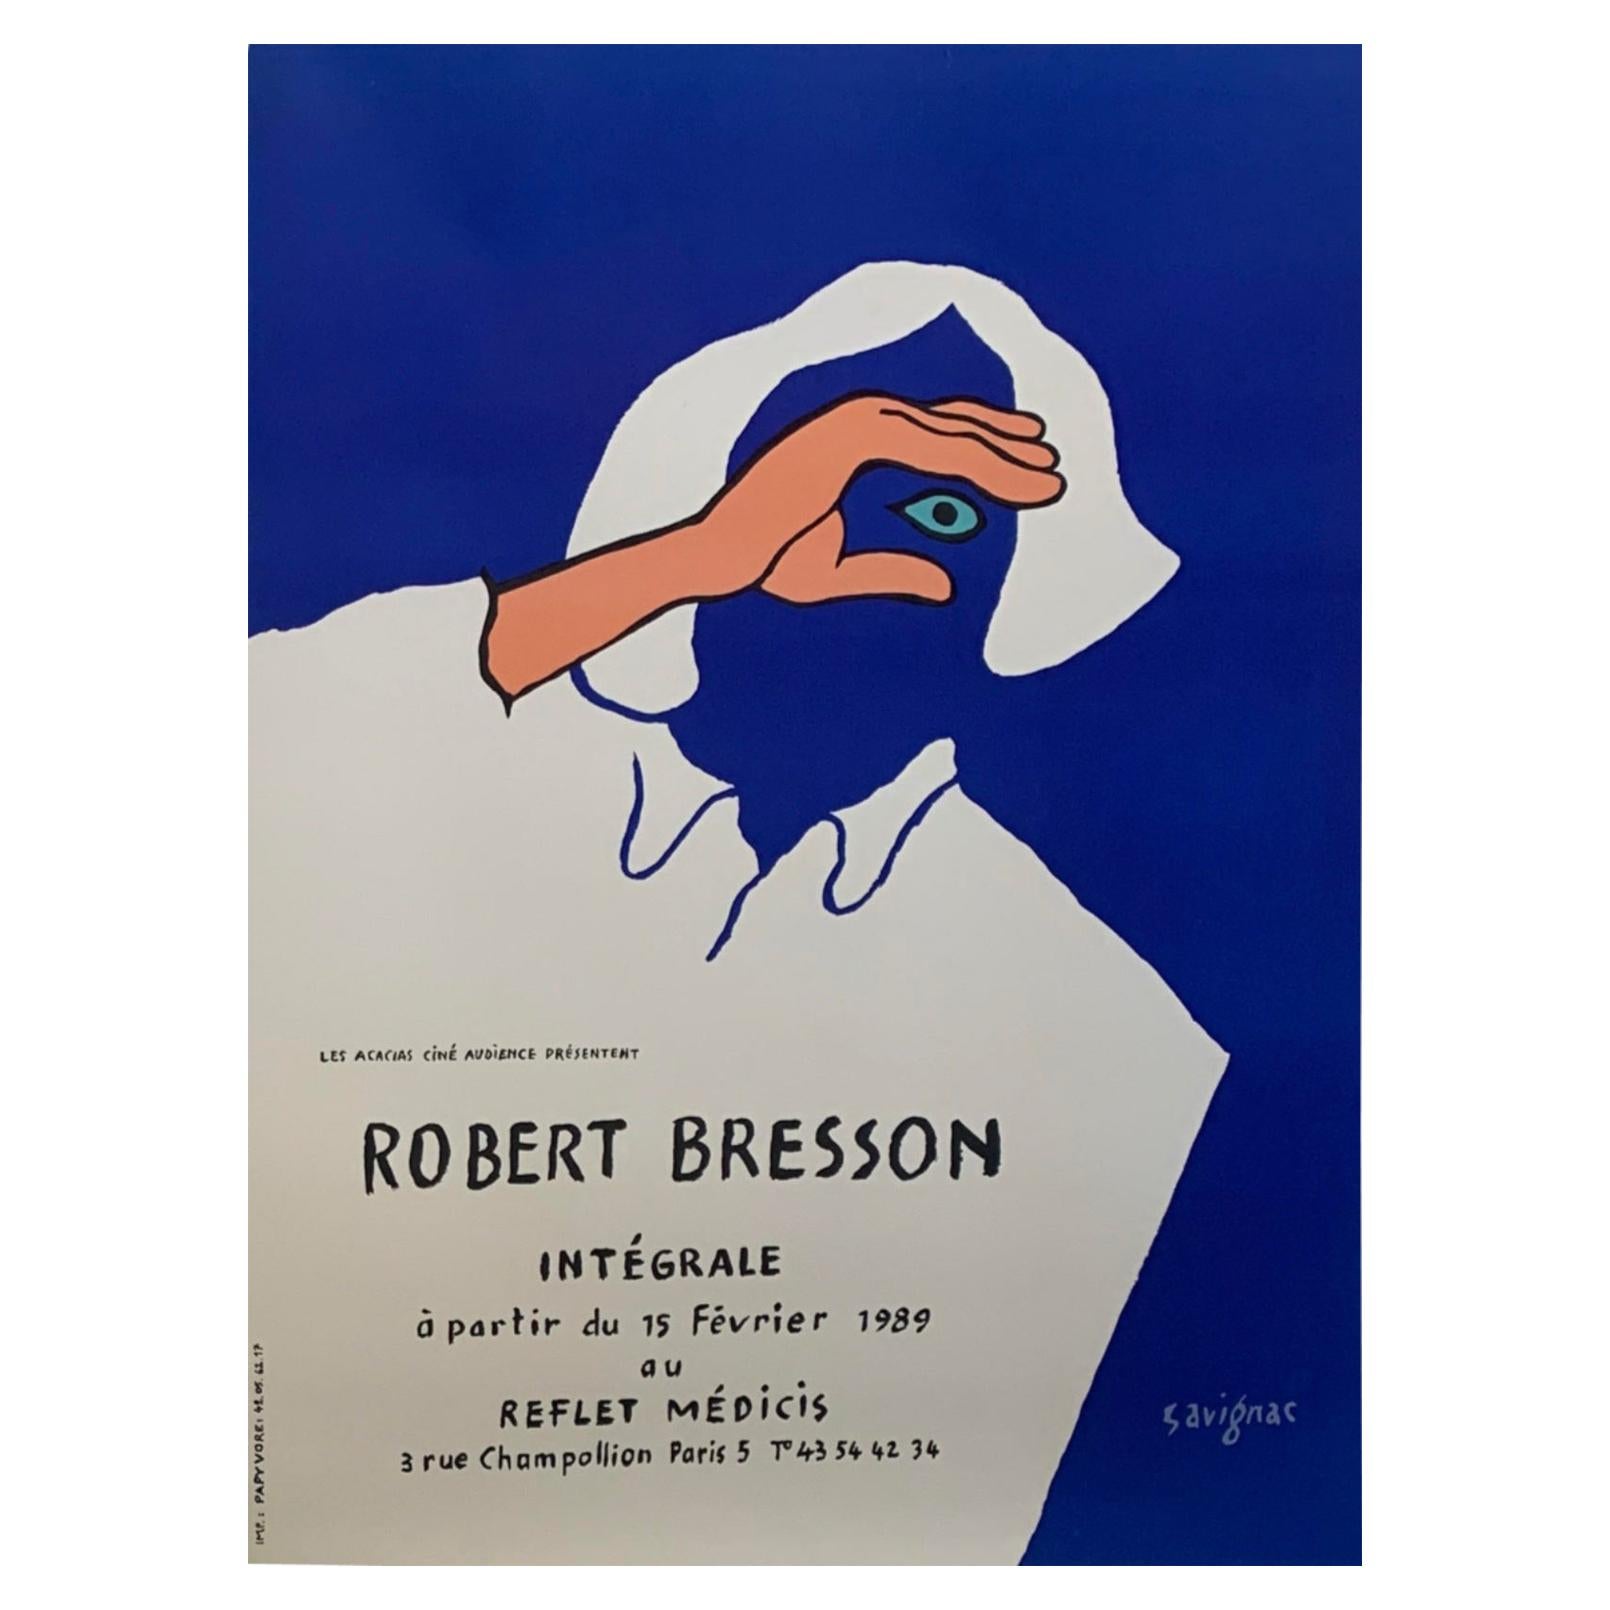 Original Vintage Poster of Robert Bresson French Film Director by Savignac, 1989 For Sale